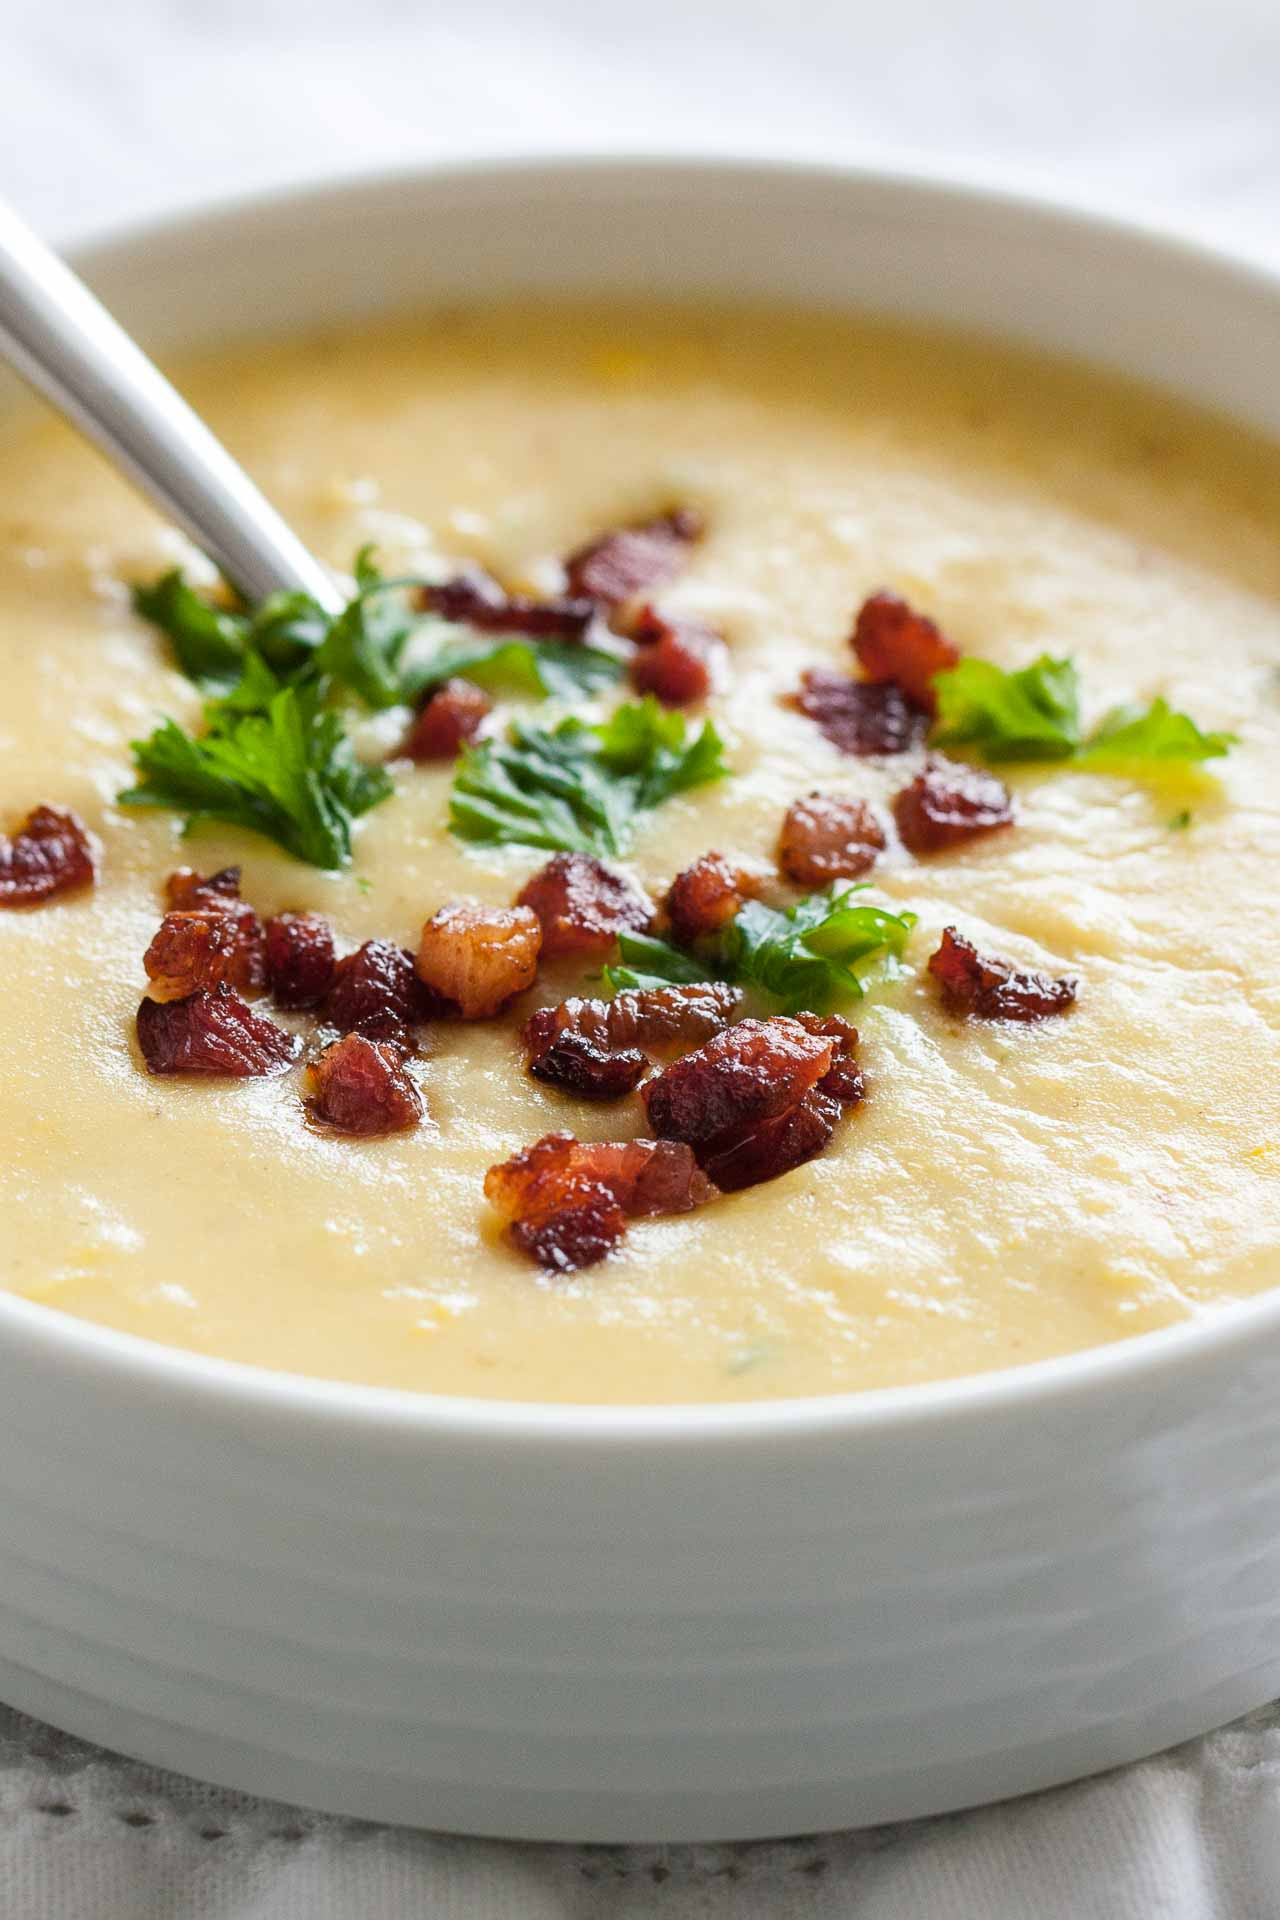 Potato Soup Recipes With Bacon
 Easy Potato Bacon Soup with Corn Less than 30 Minutes